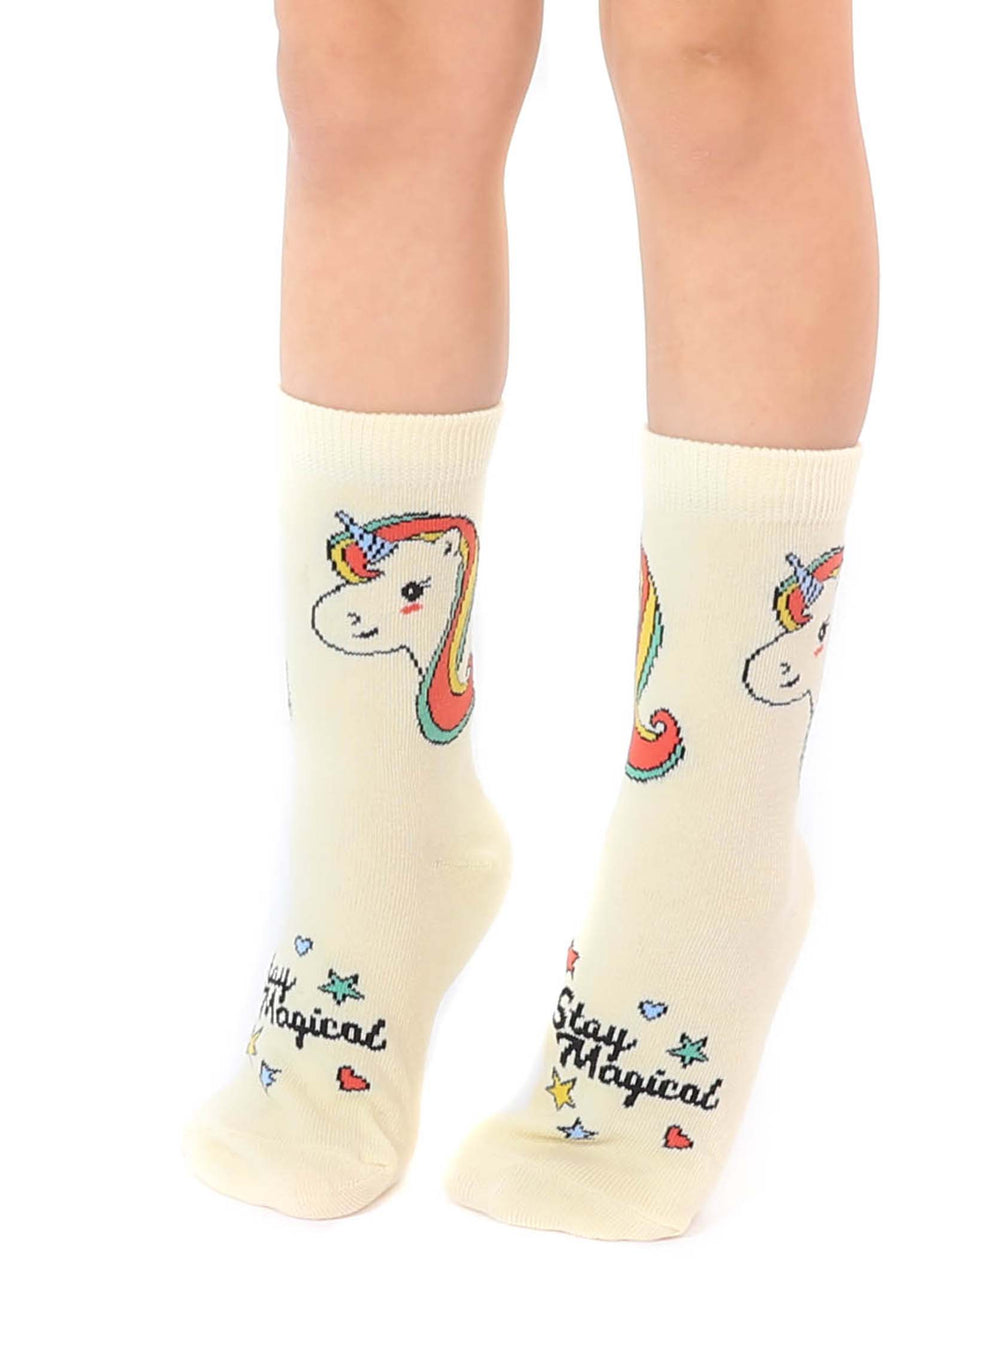 Kids Unicorn 3D Socks - Premium Socks from Living Royal - Just $9.99! Shop now at Pat's Monograms